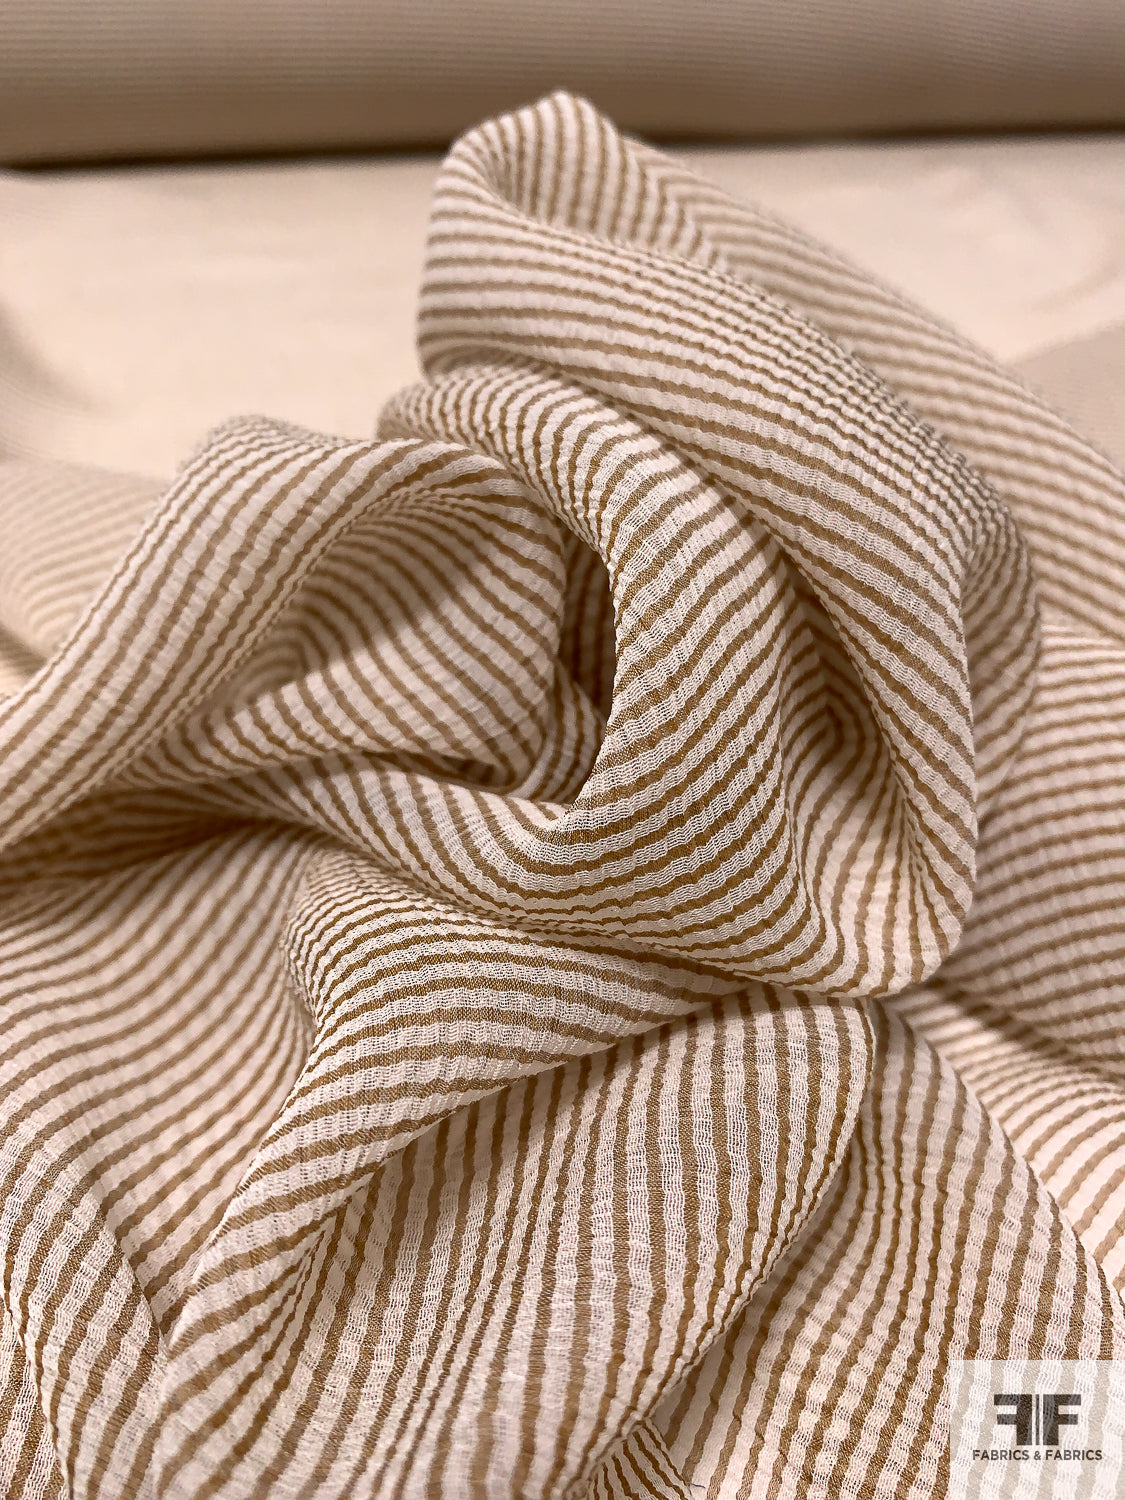 Horizontal Pinstriped Printed Slight Crinkled Silk Chiffon - Tan / Off-White